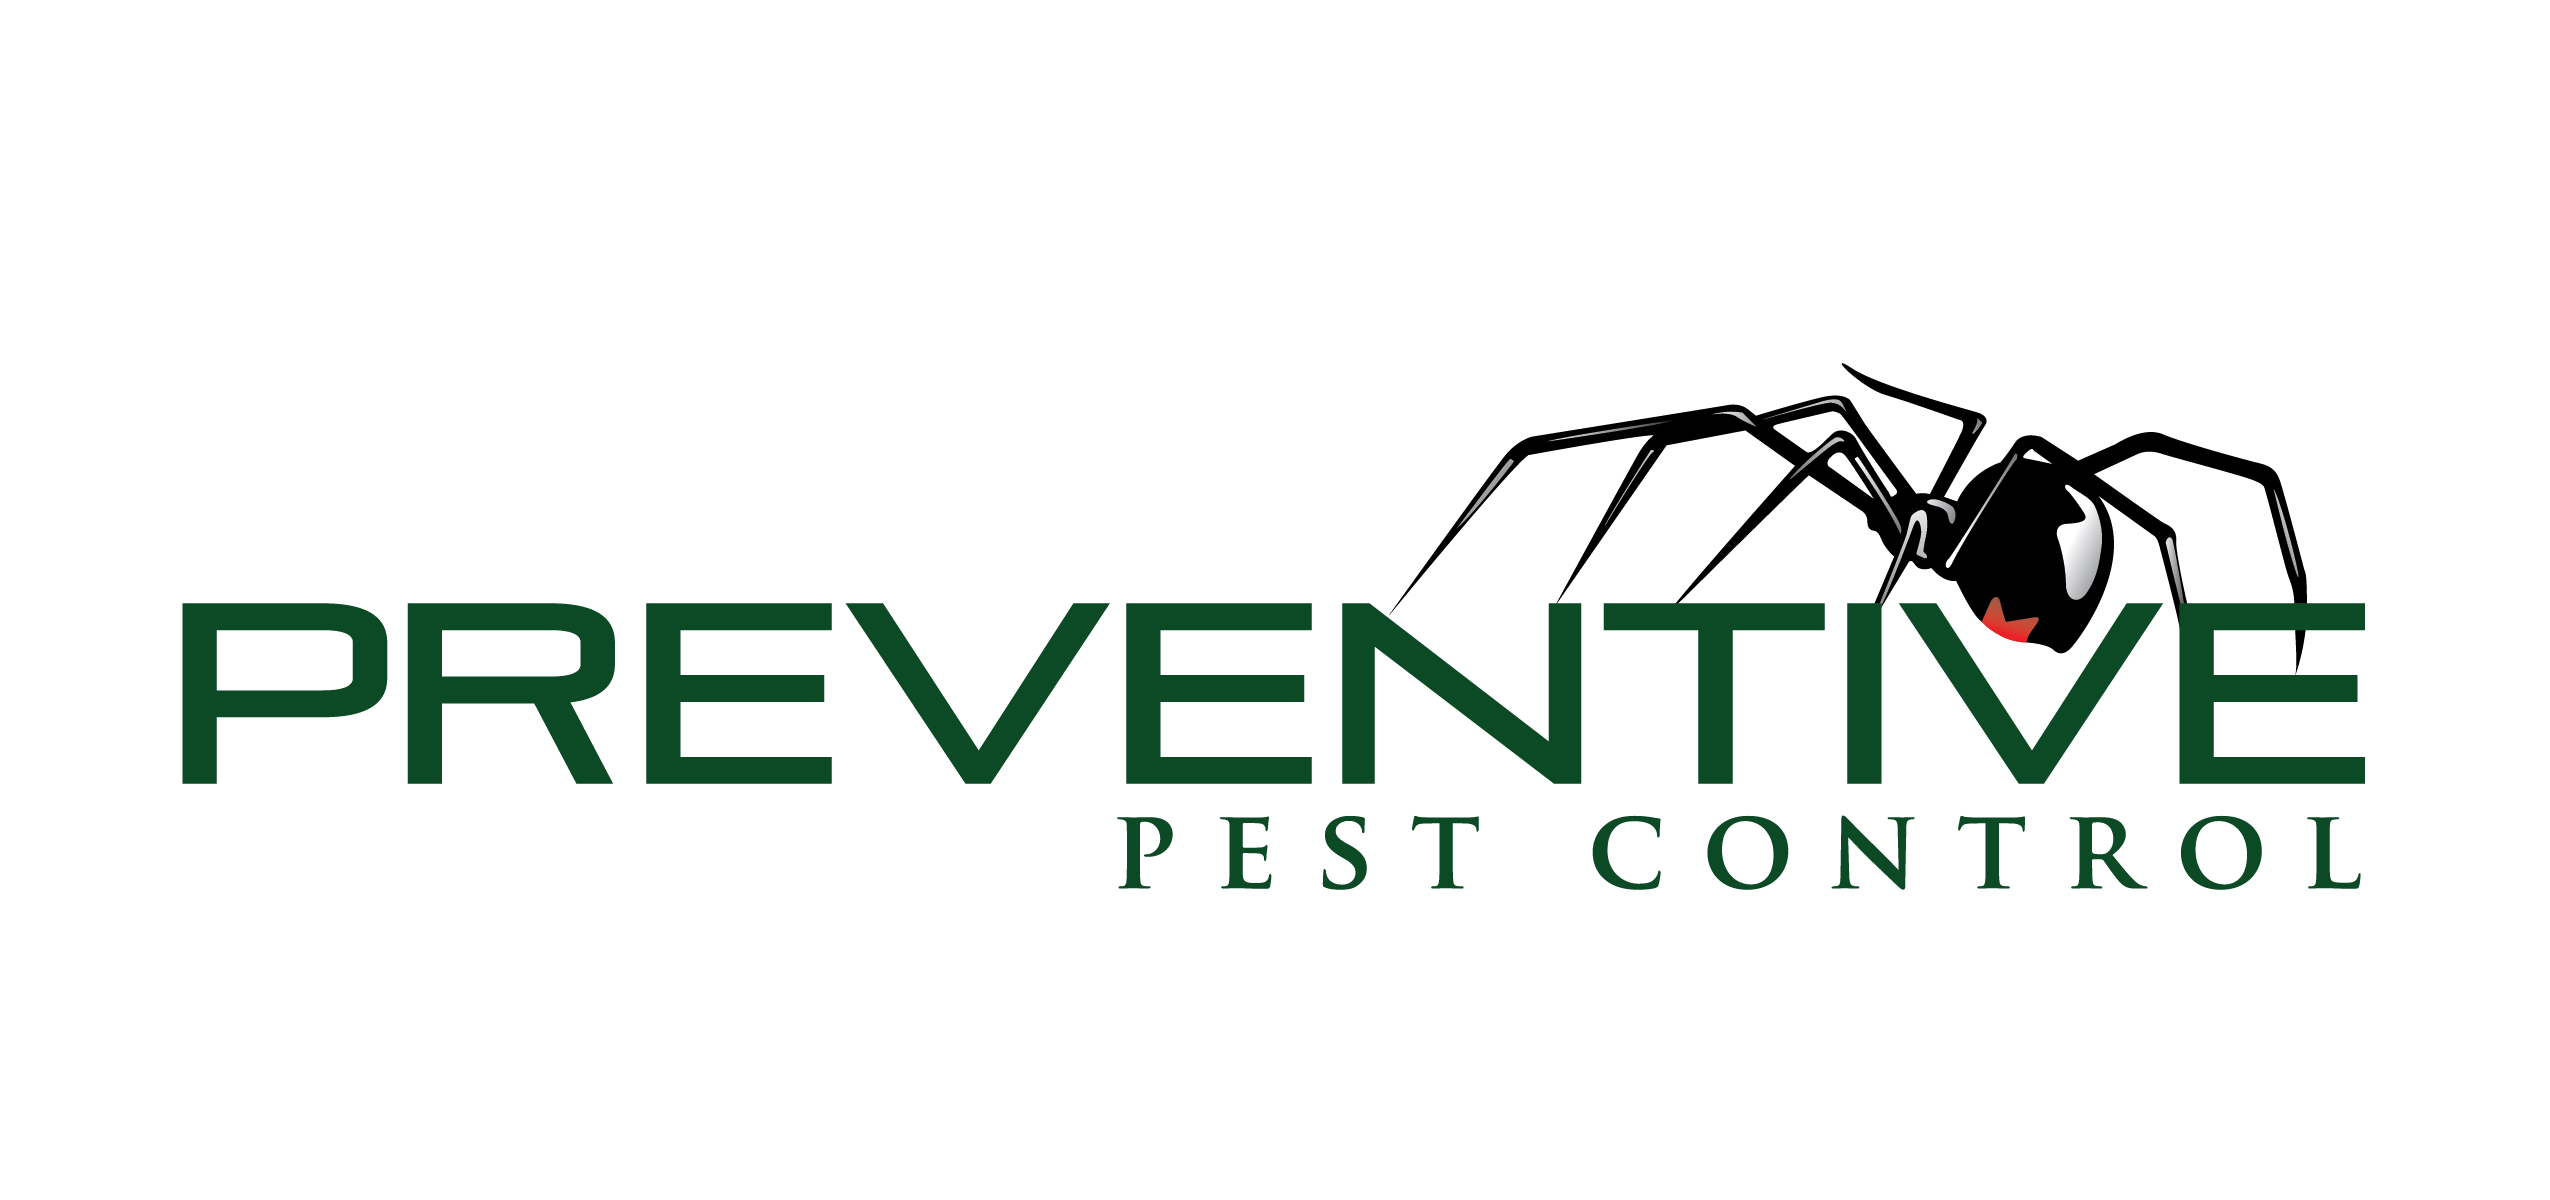 Preventive Pest Control - West Houston